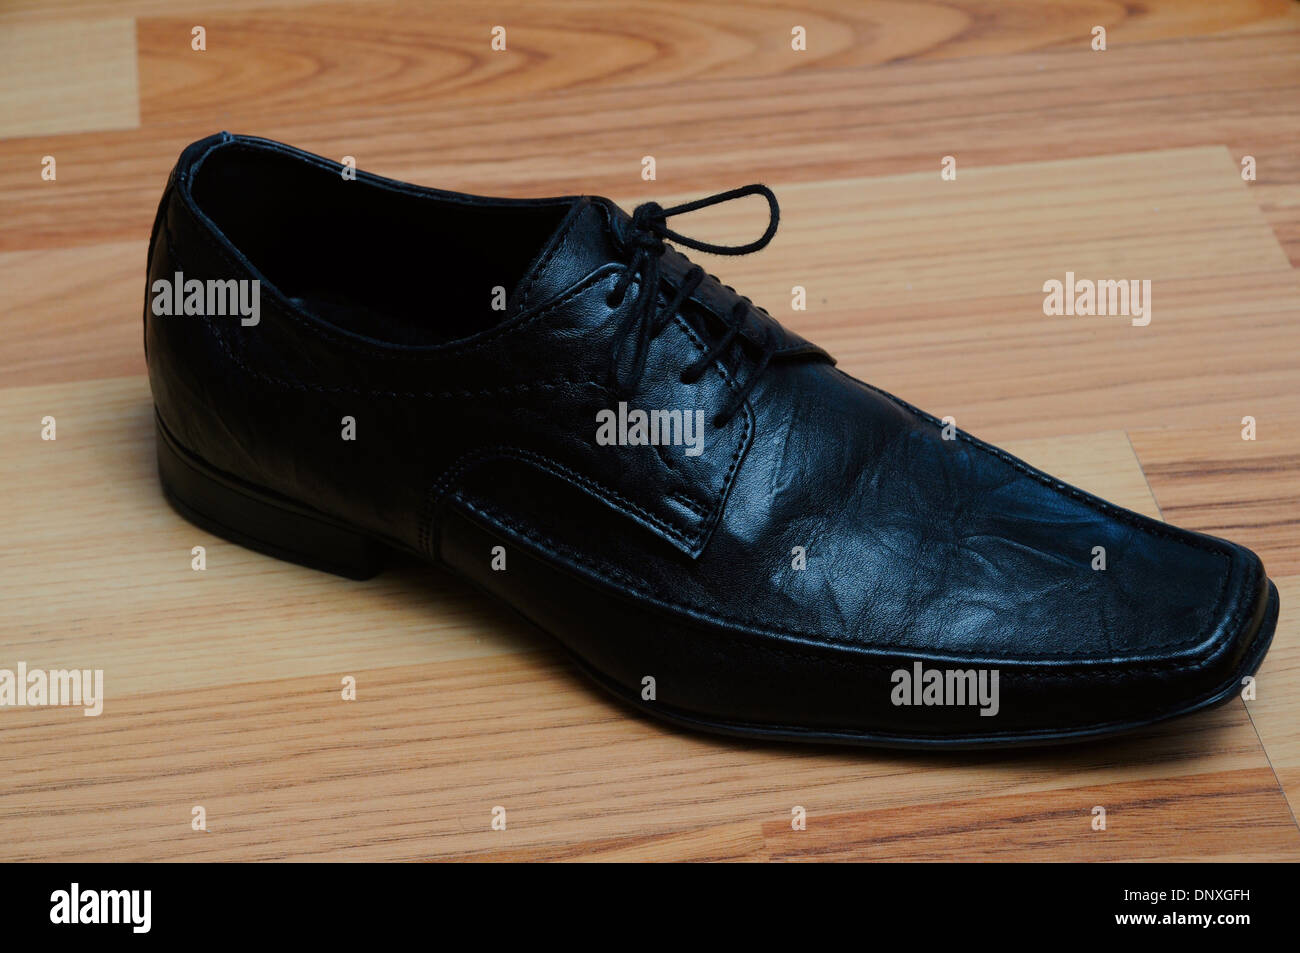 Black leather dress shoe. Stock Photo